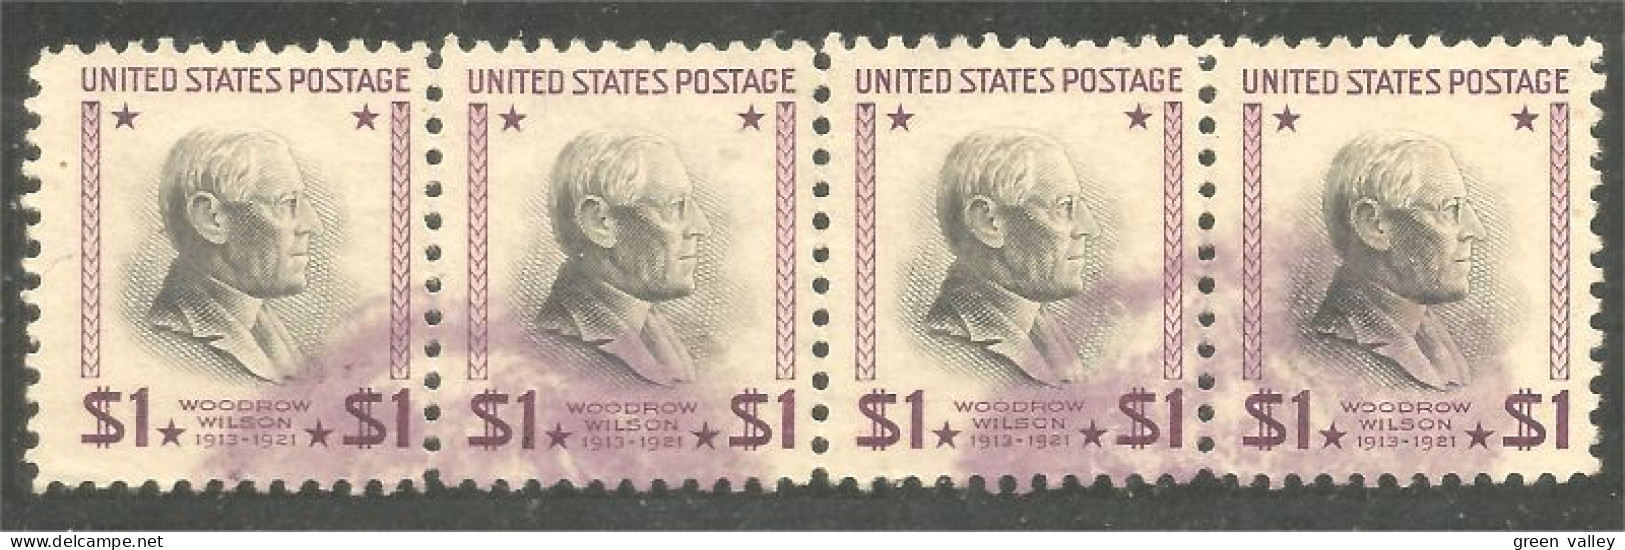 912 USA $1 Woodrow Wilson Dollar Strip Of 4 Stamps (USA-468) - Gebraucht